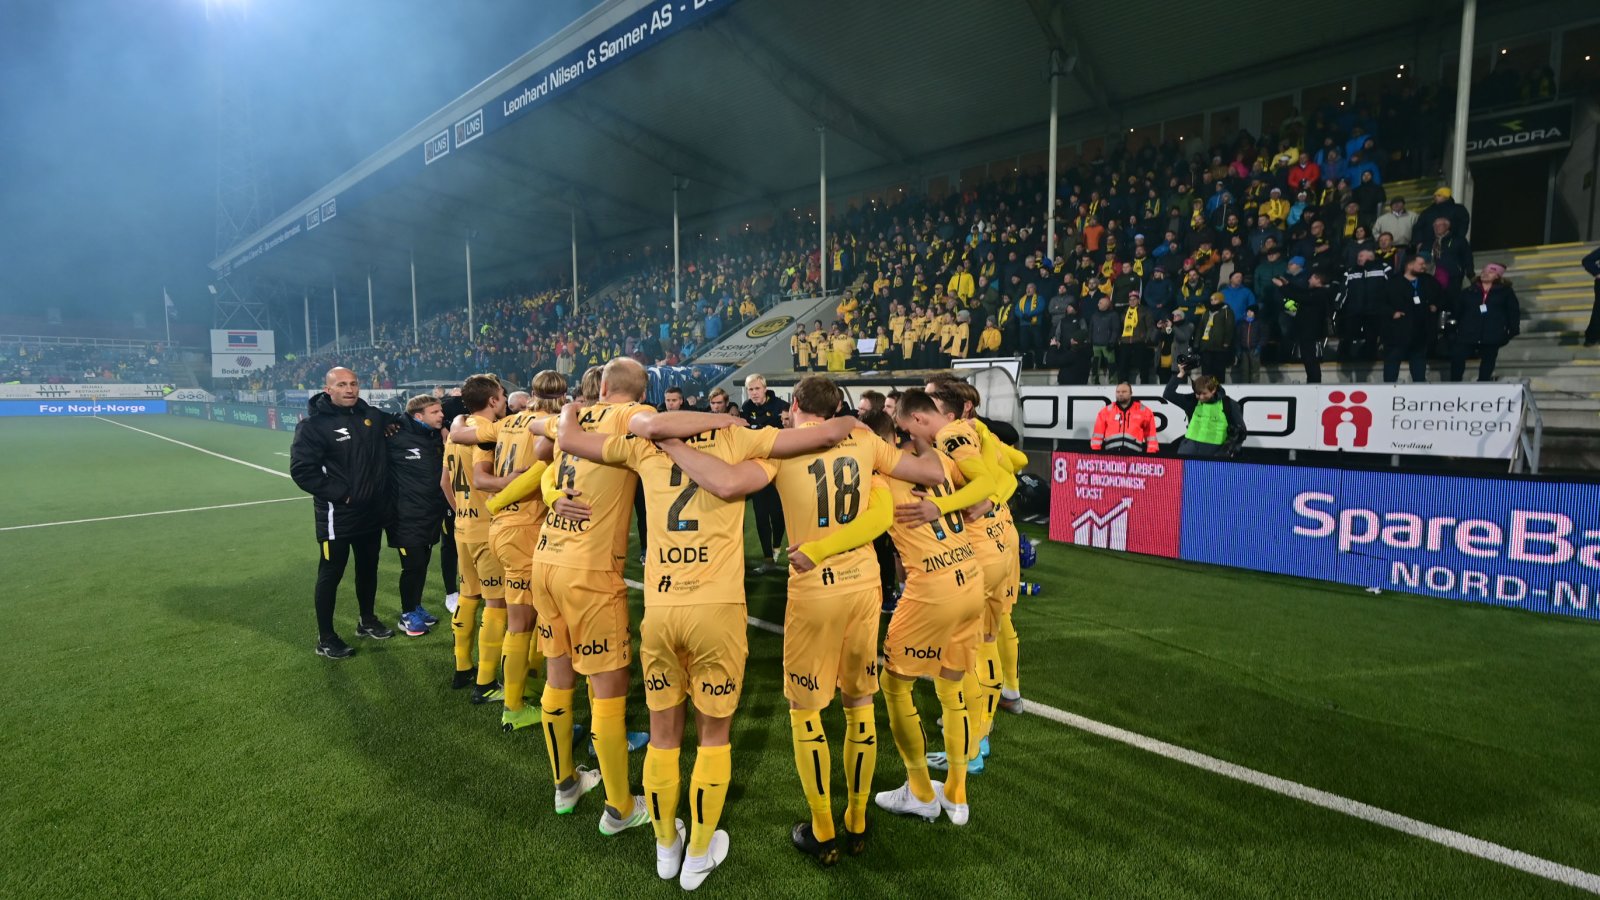 Aspmyra stadion. Tribune. Publikum. Bodø/Glimt mot Tromsø på Aspmyra i 2019.